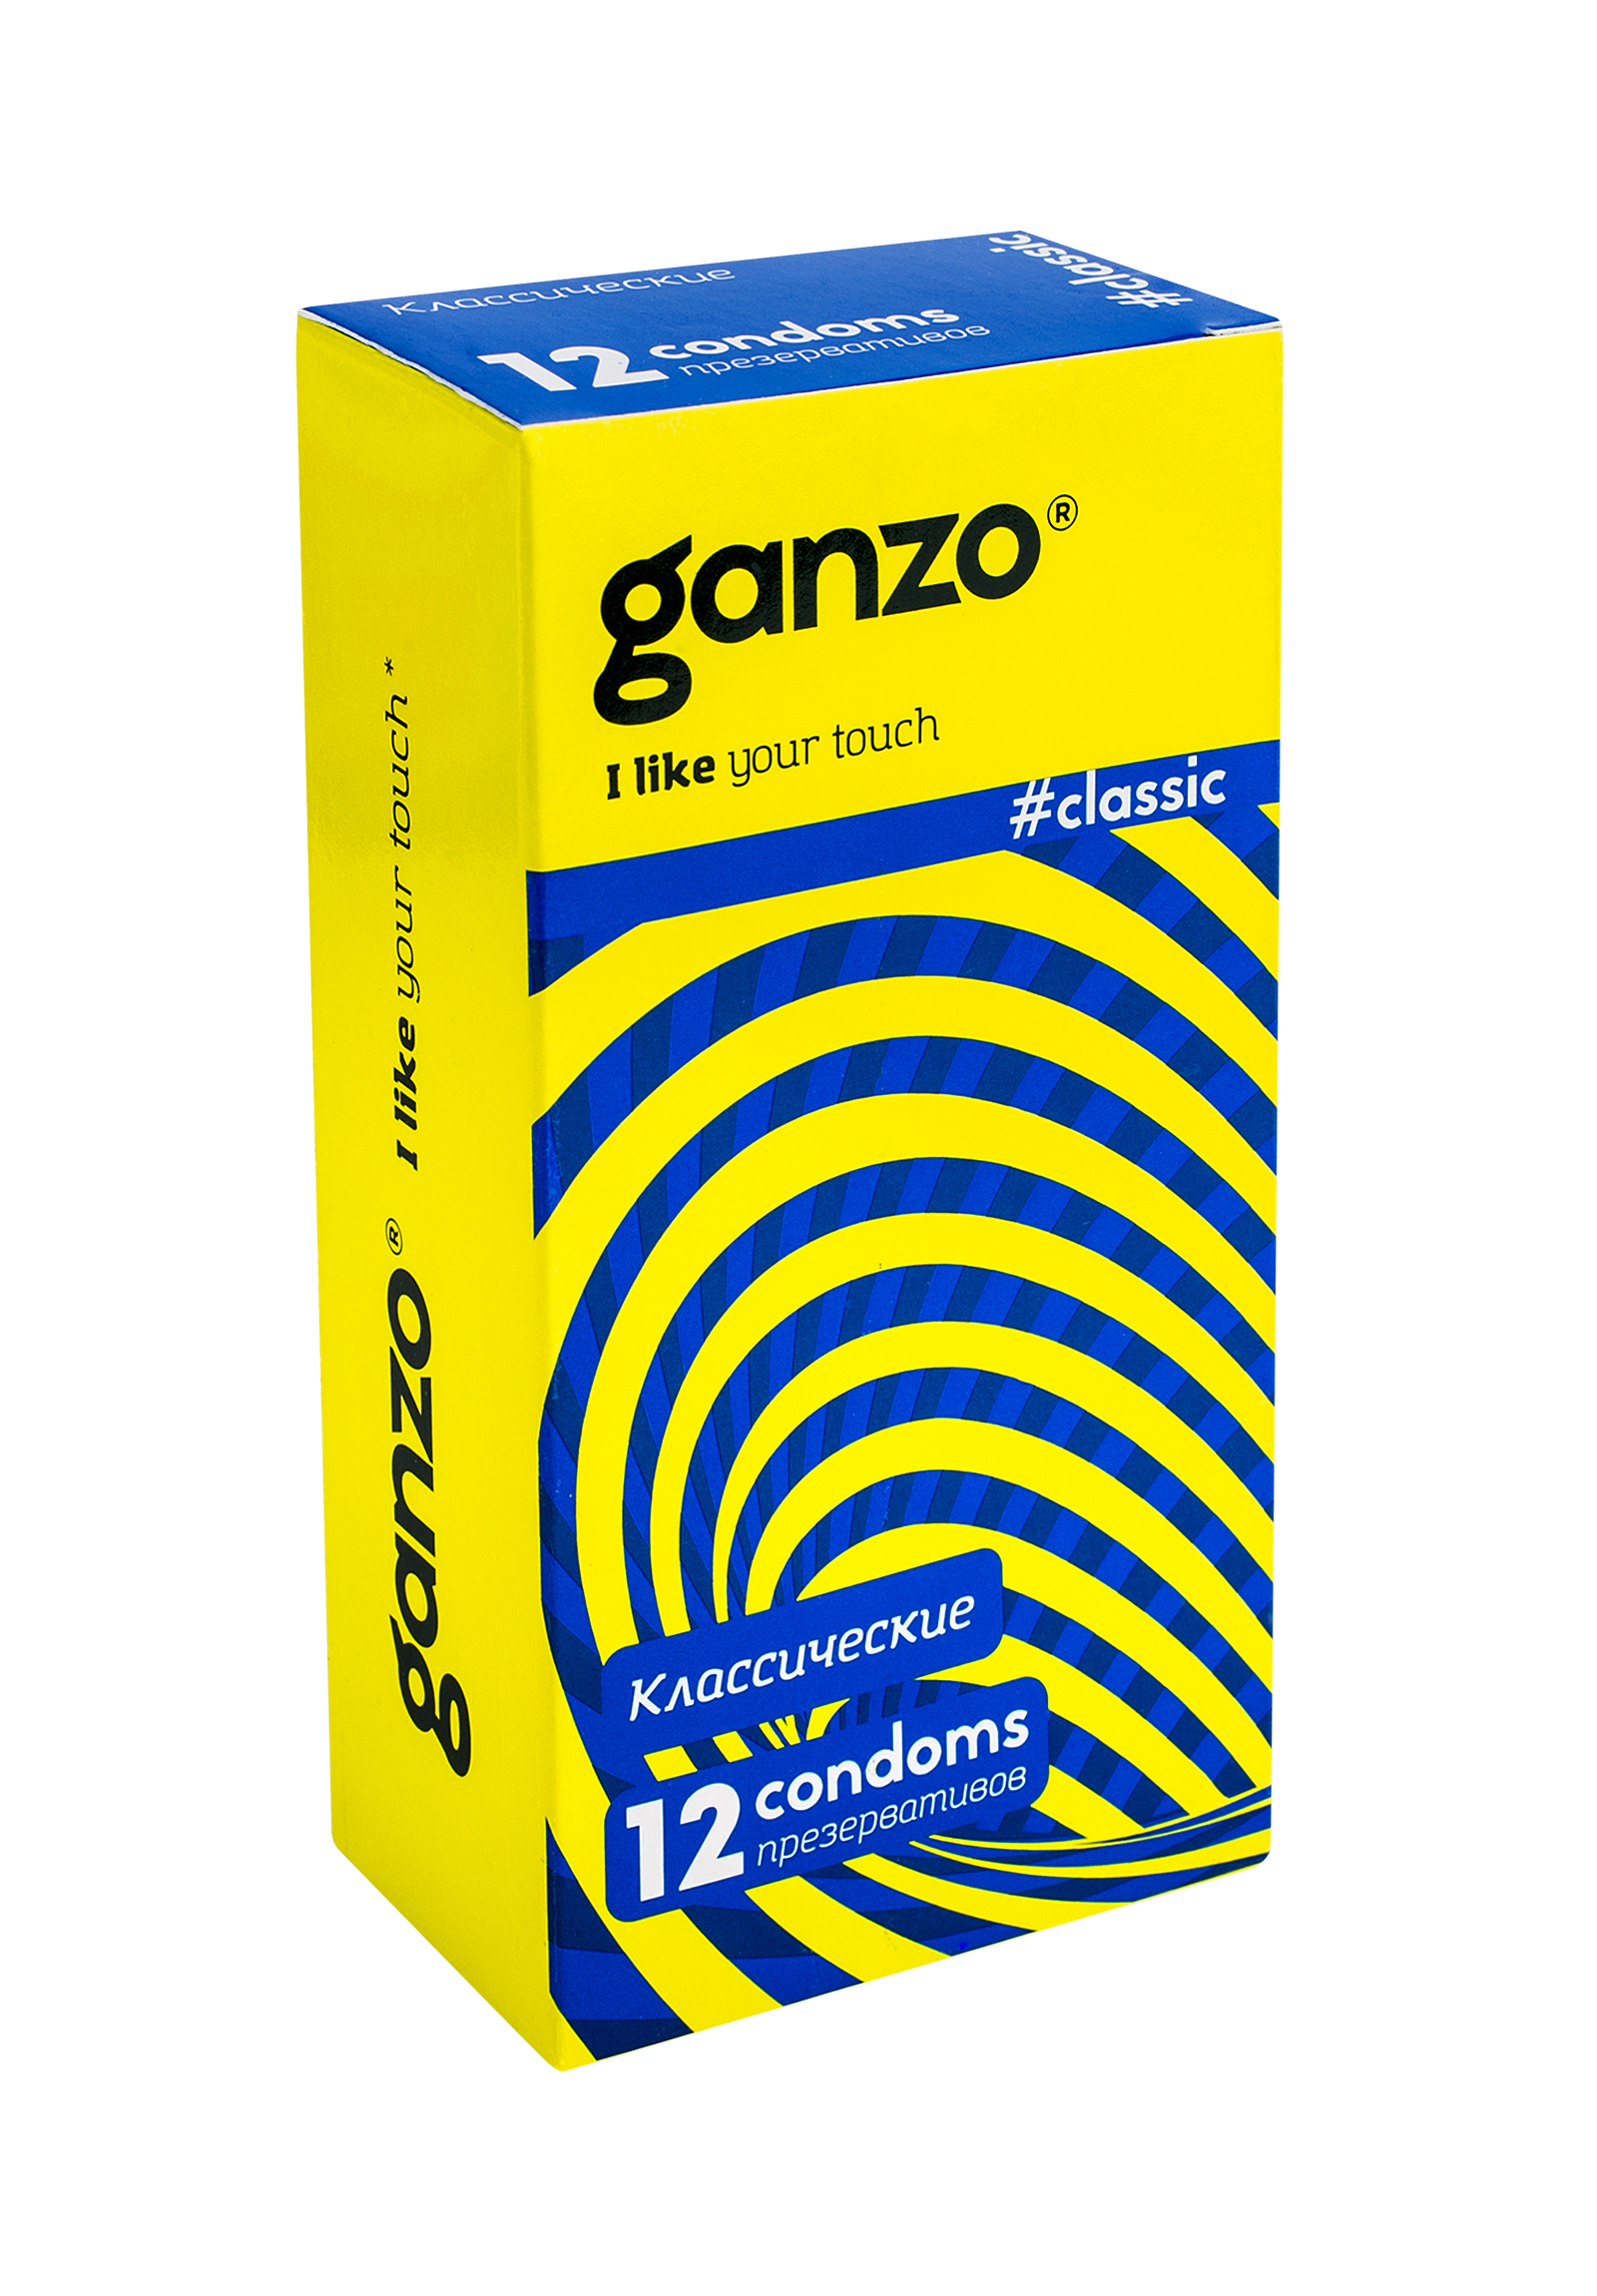 Ганзо презервативы классик №12